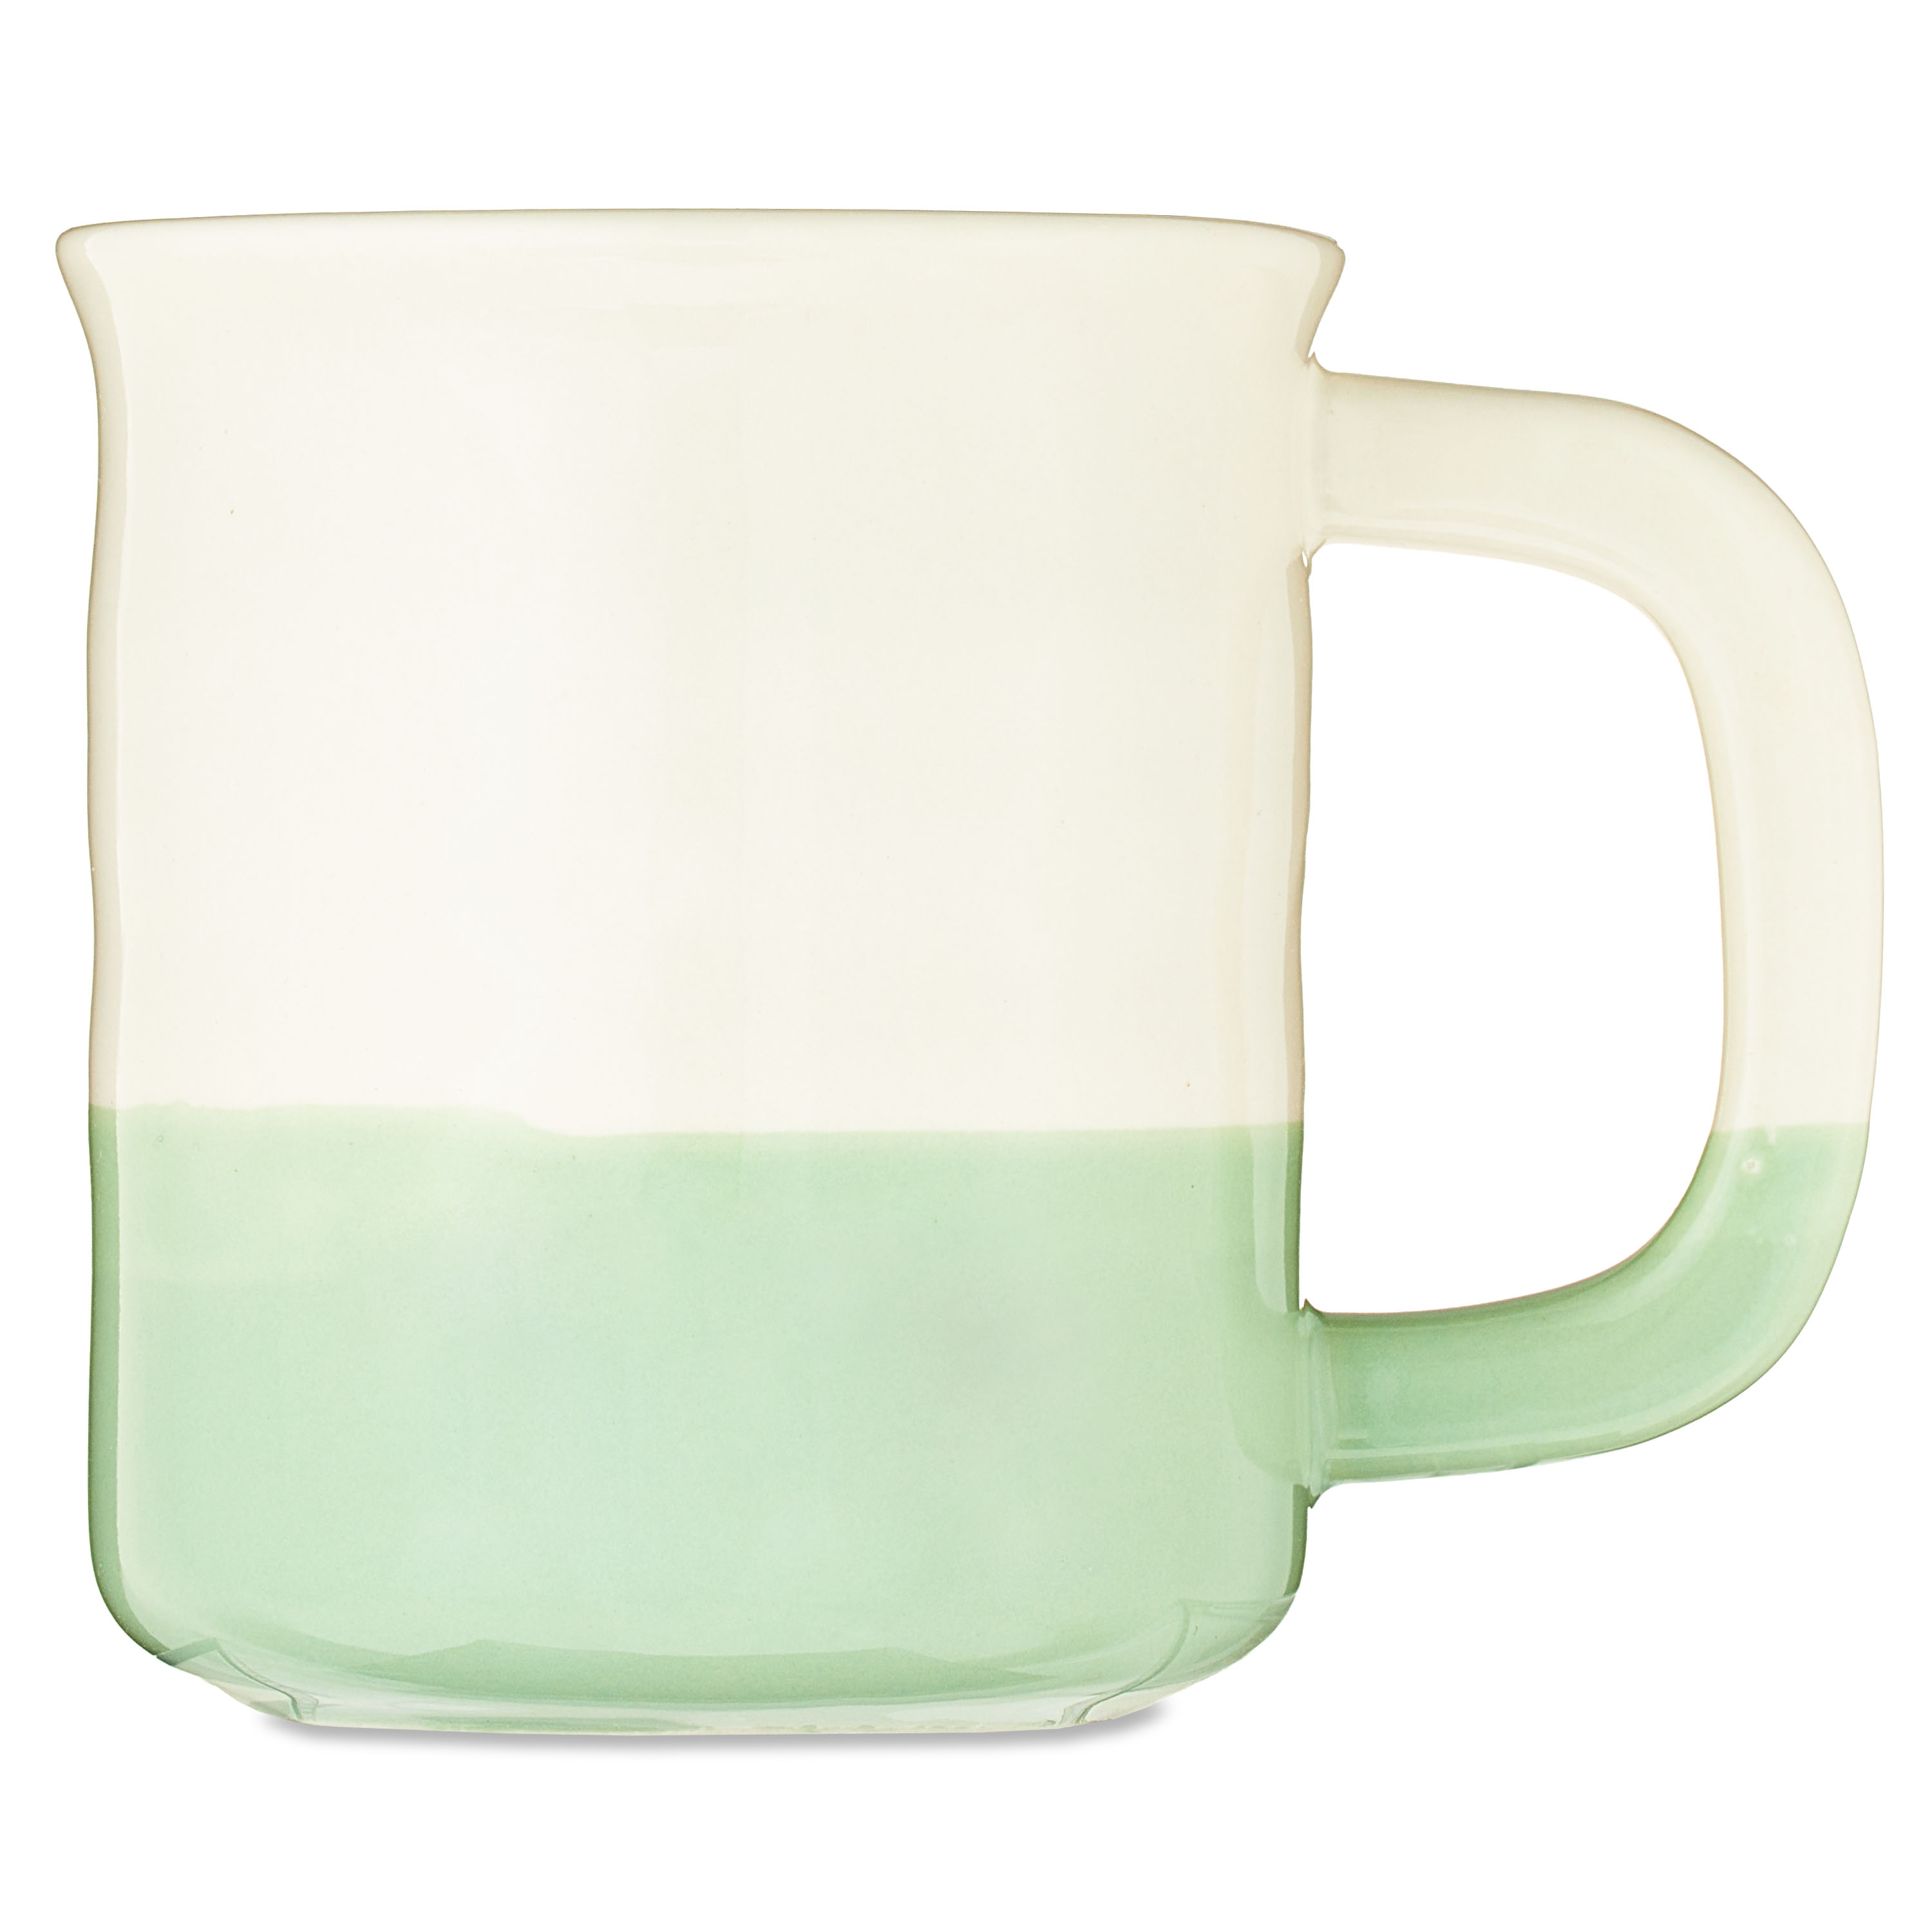 Mother's Day Mint Green & White Ceramic Mug, Nana-Way To Celebrate - image 3 of 7